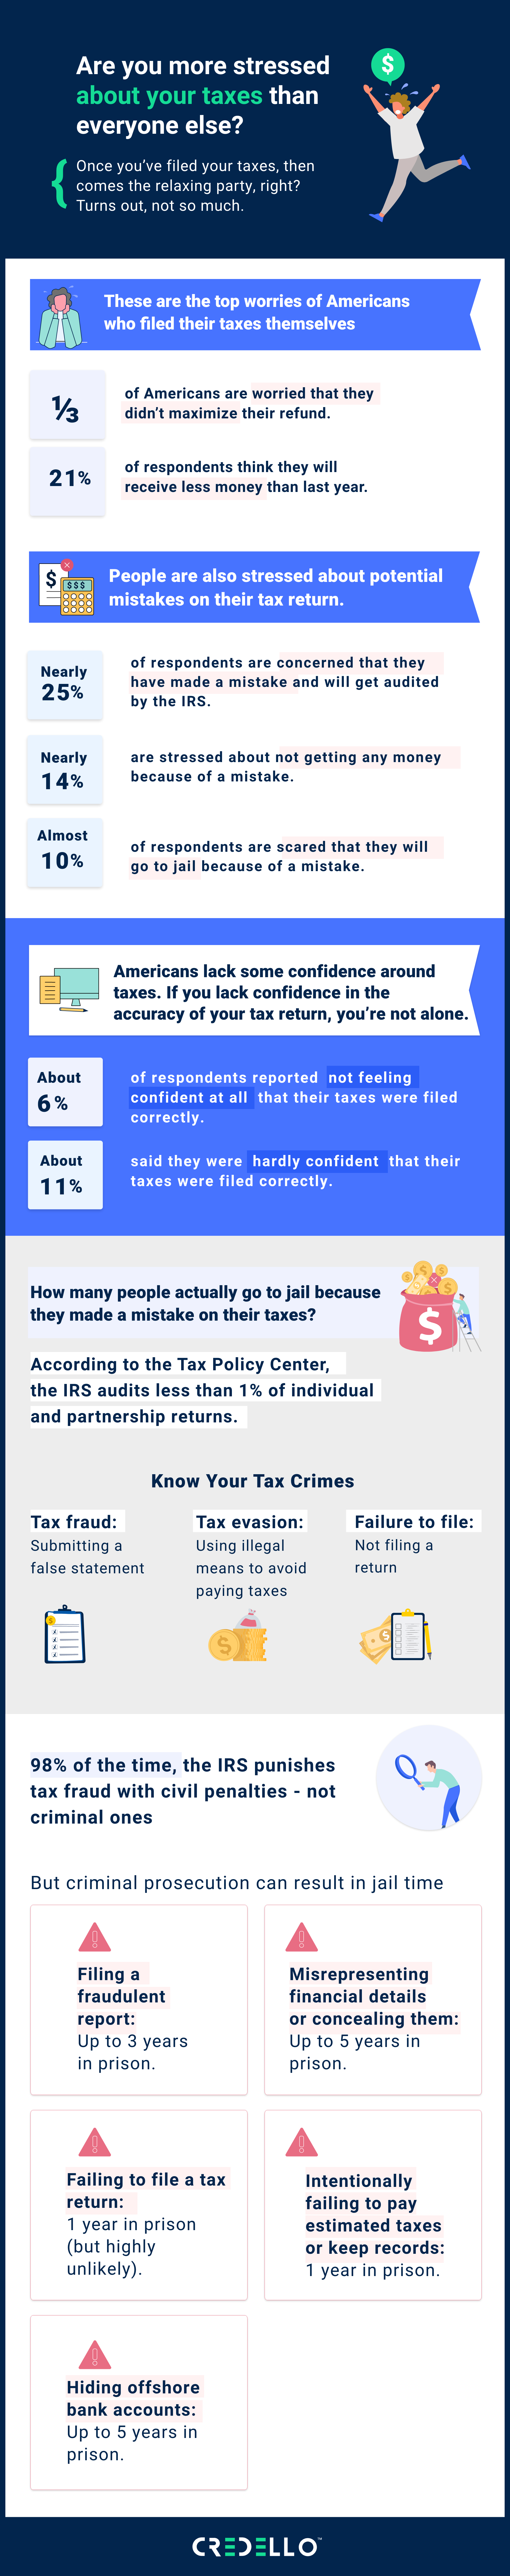 Tax refund stress survey